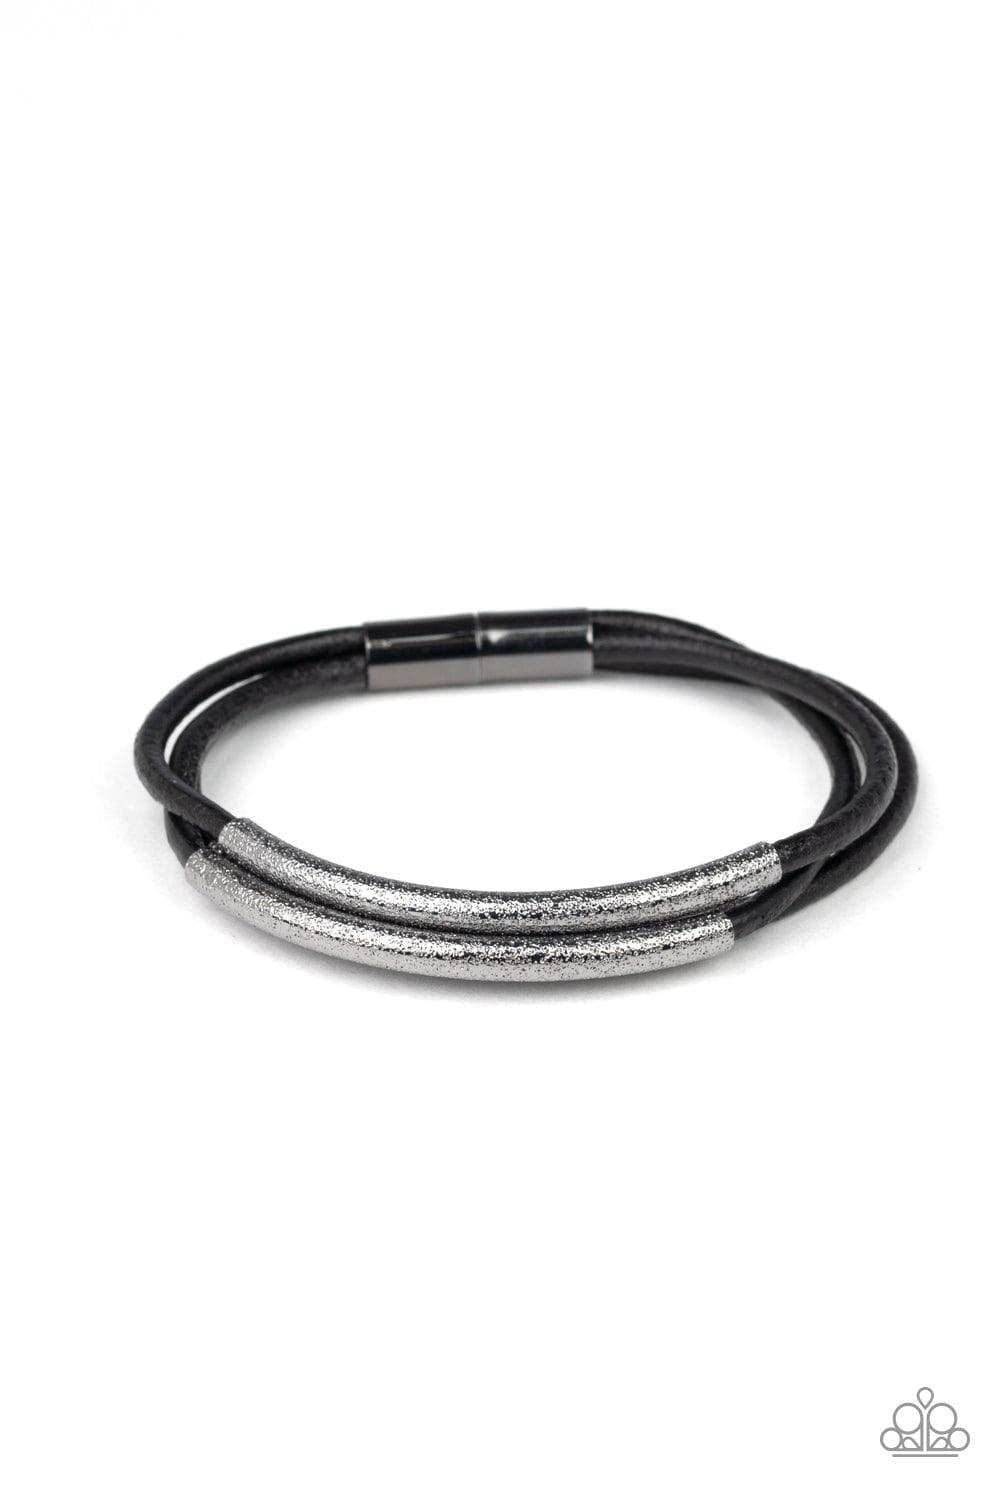 Paparazzi Accessories - Magnetic Maverick - Black Bracelet - Bling by JessieK